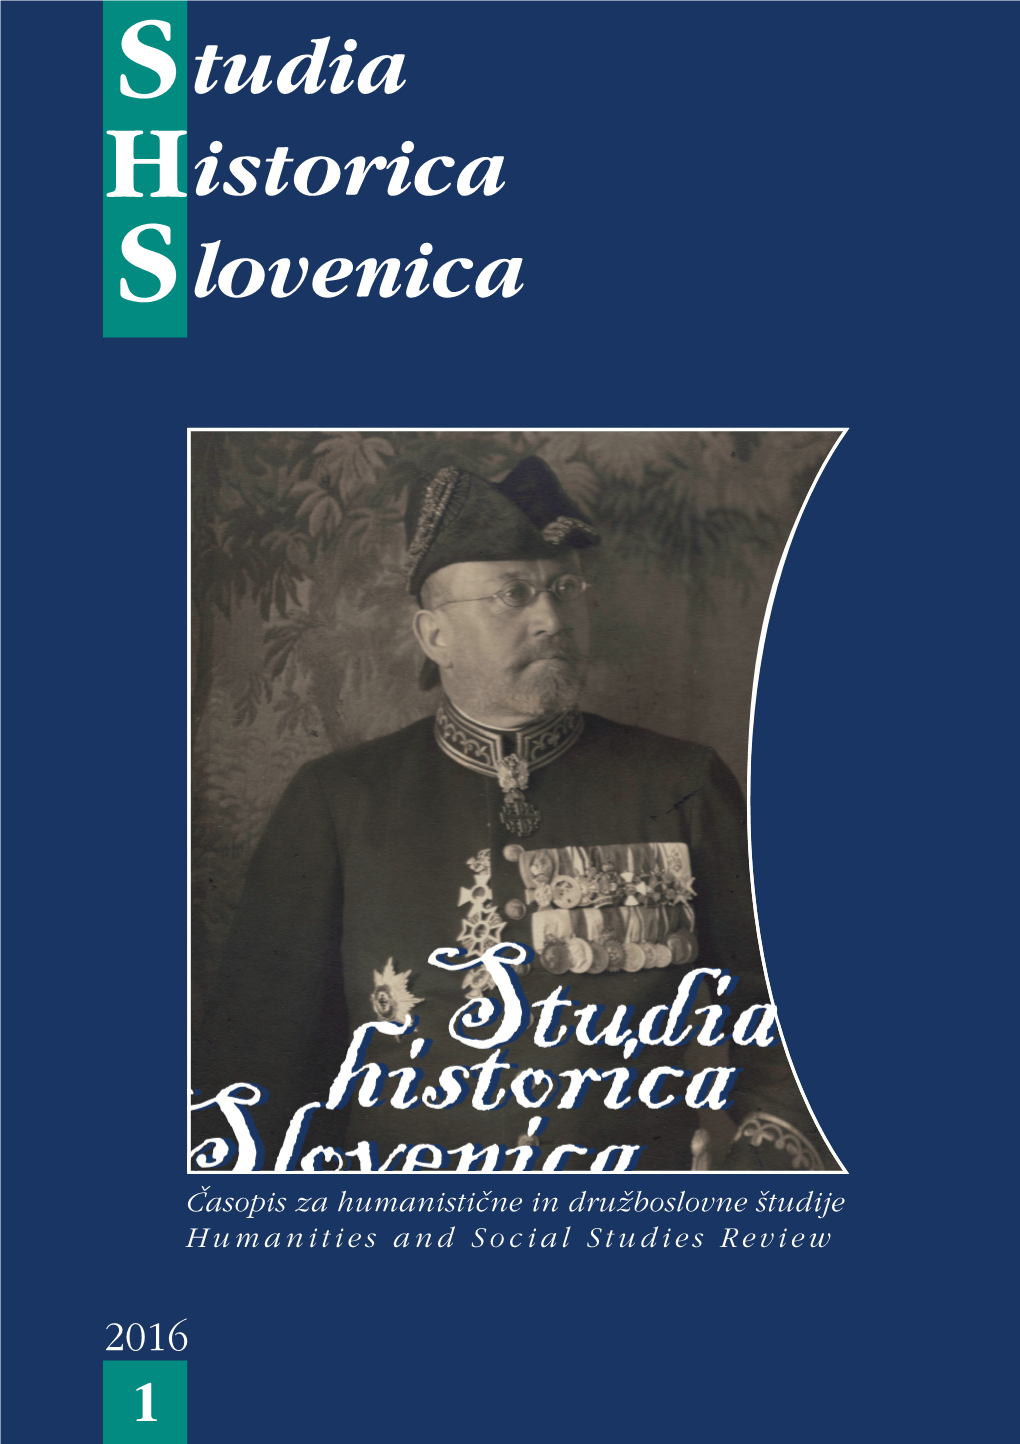 Tudia Istorica Lovenica